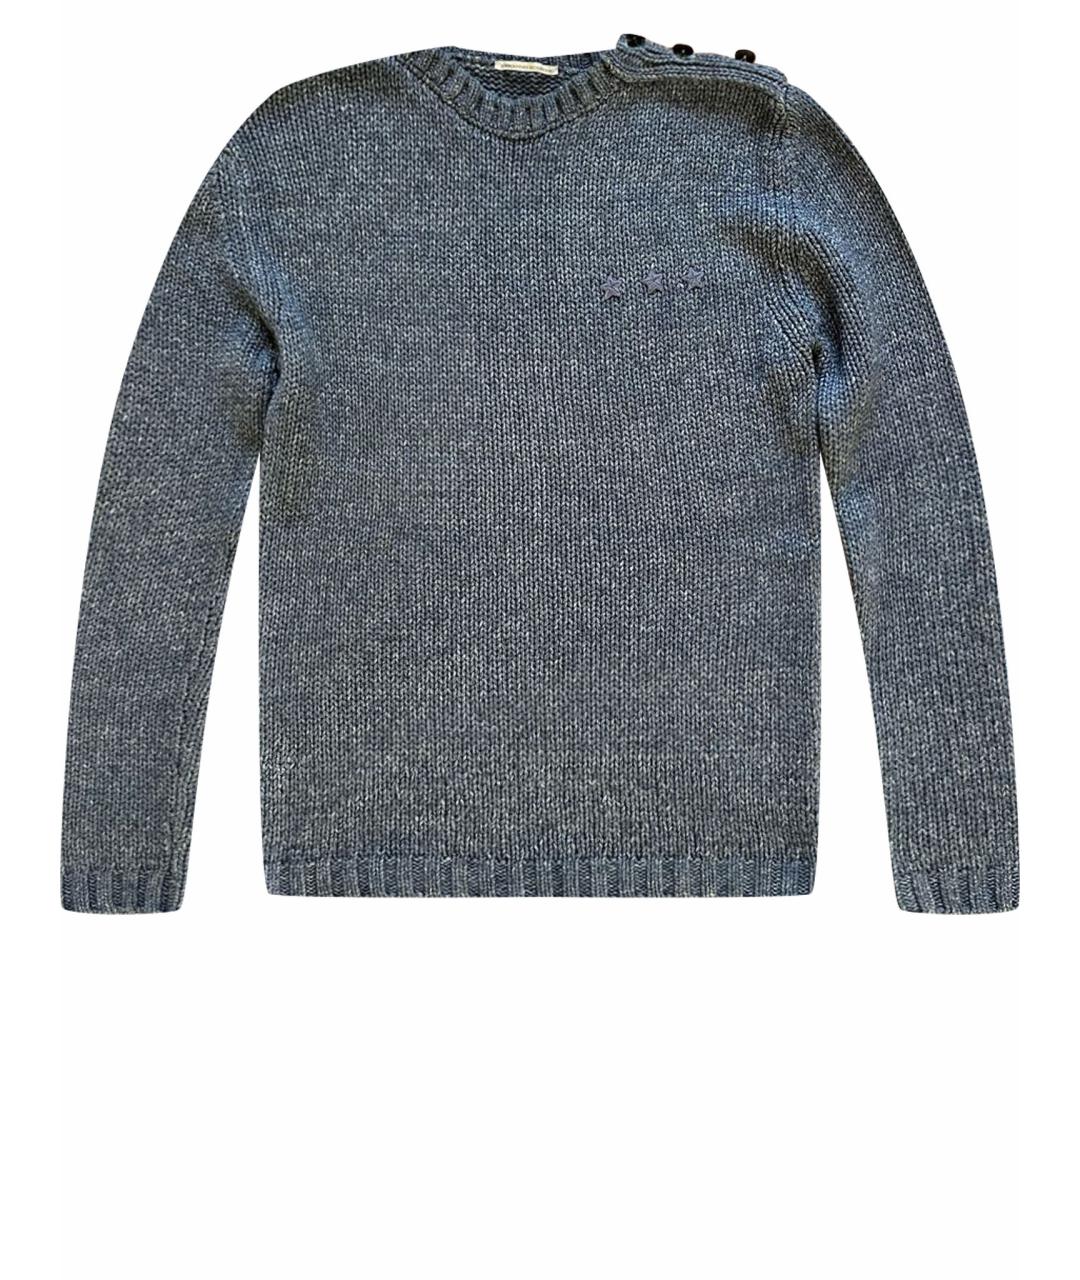 ERMANNO SCERVINO Синий хлопковый джемпер / свитер, фото 1